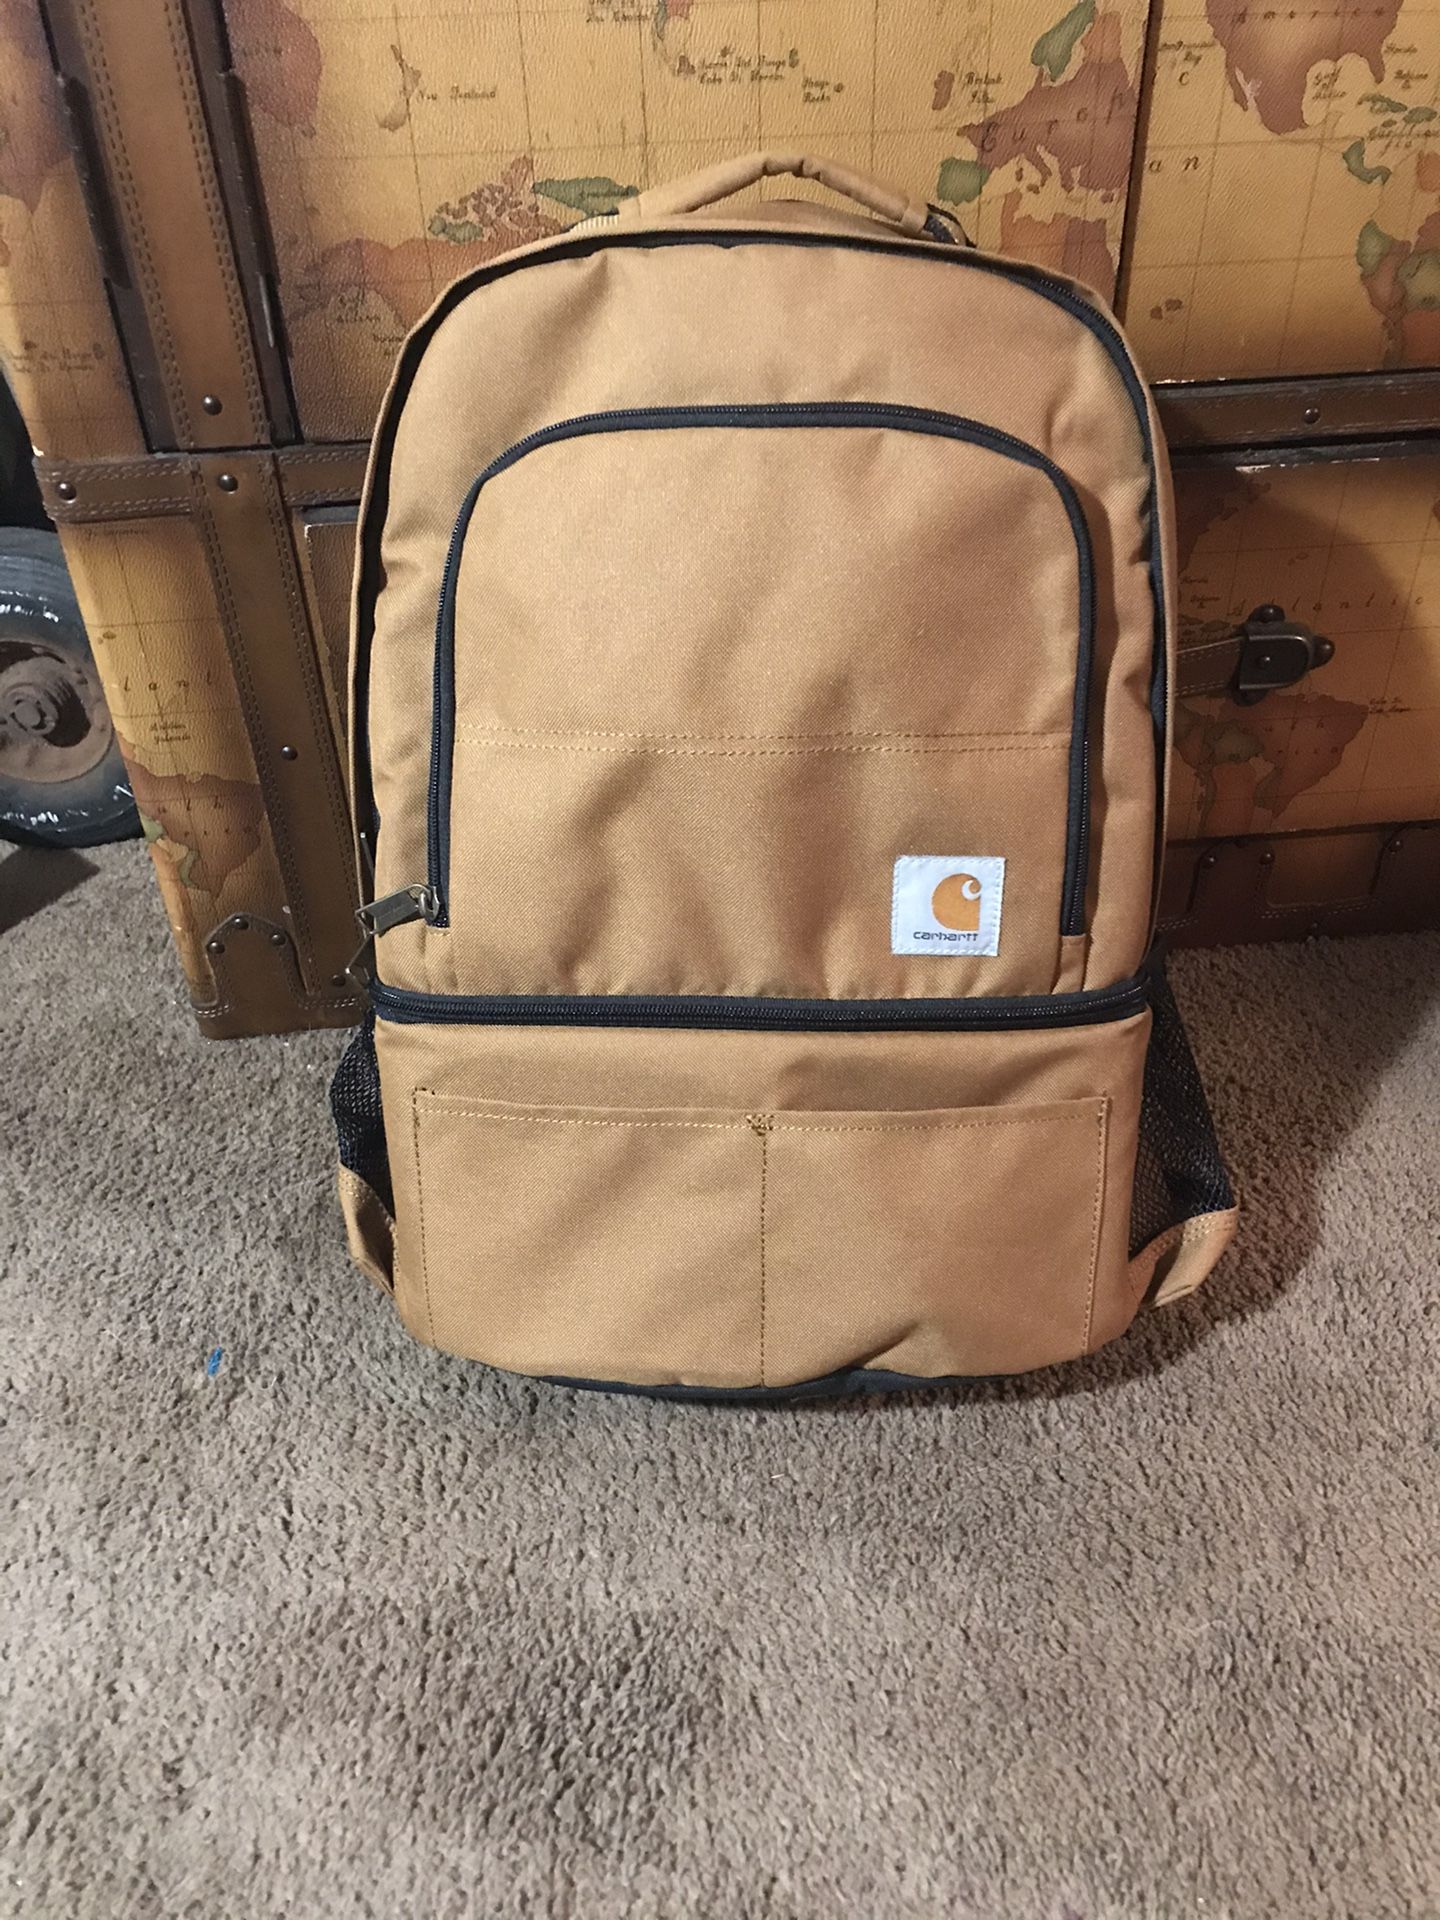 Carhartt backpack/lunchbox